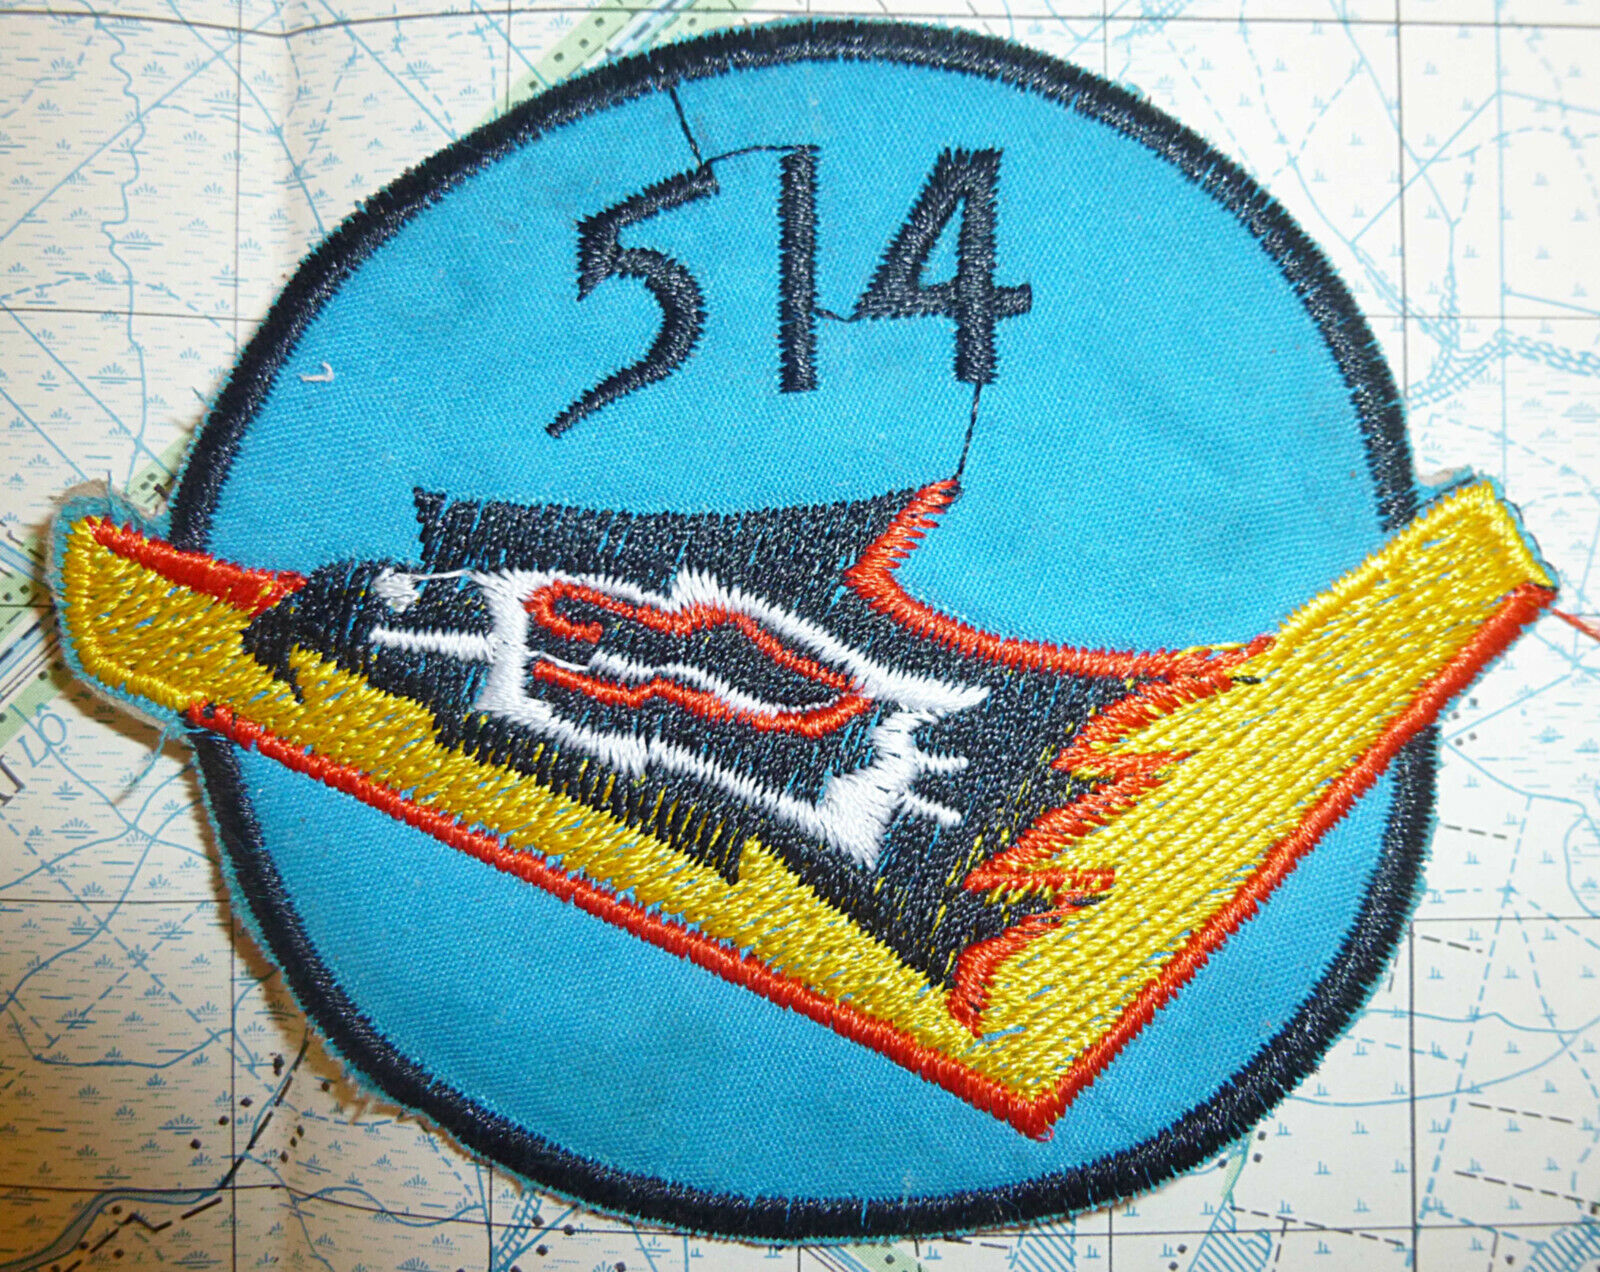 VNAF PATCH - 514th Fighter Squadron - Bien Hoa - Skyraider - Vietnam War - X.924